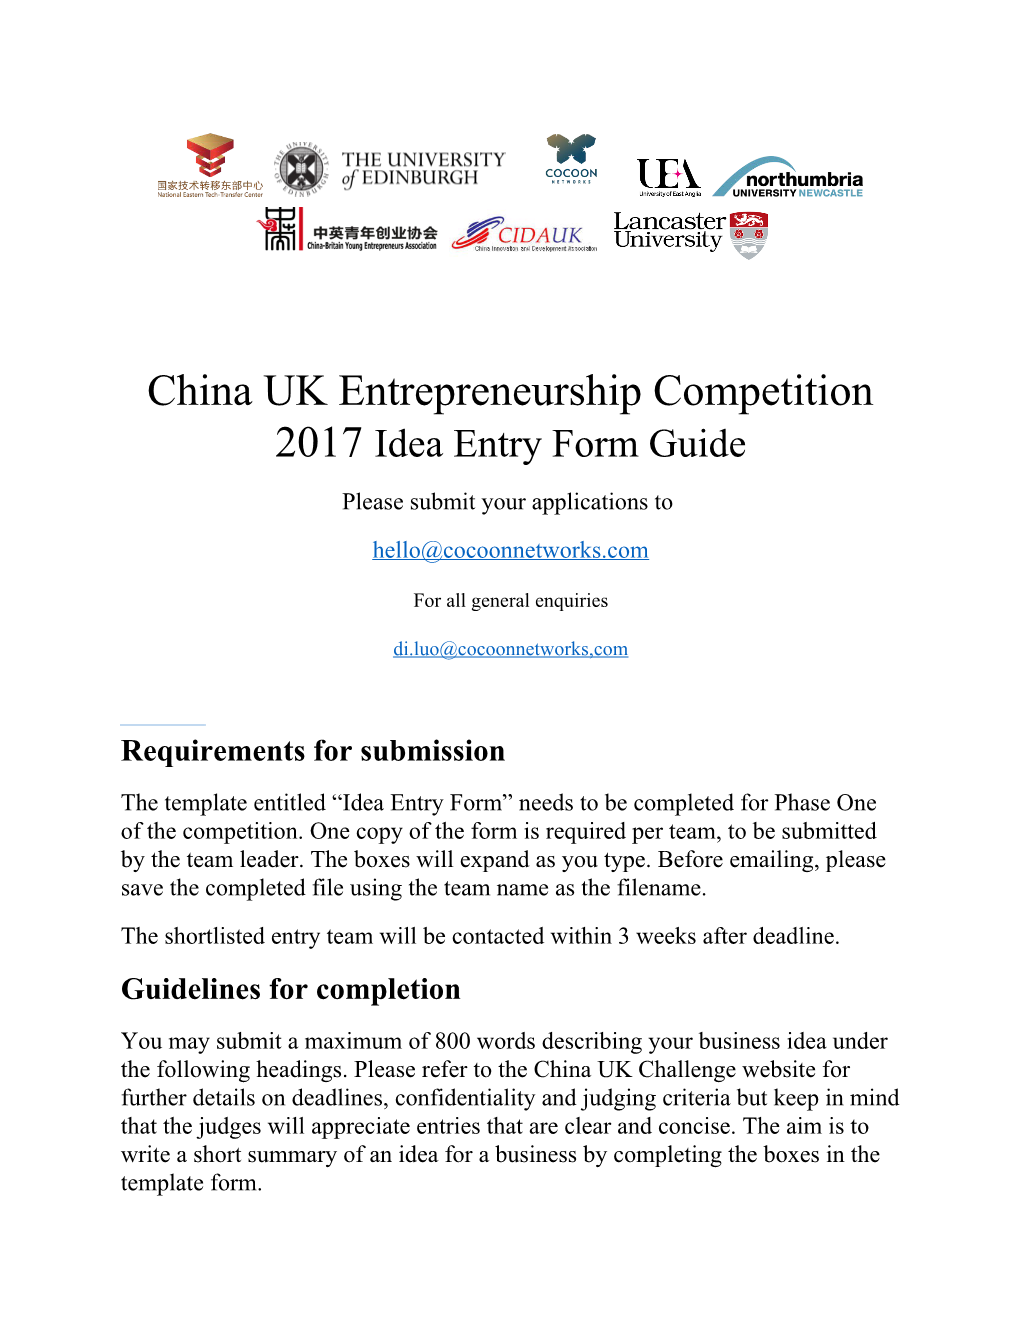 China UK Entrepreneurship Competition 2017 Idea Entry Form Guide